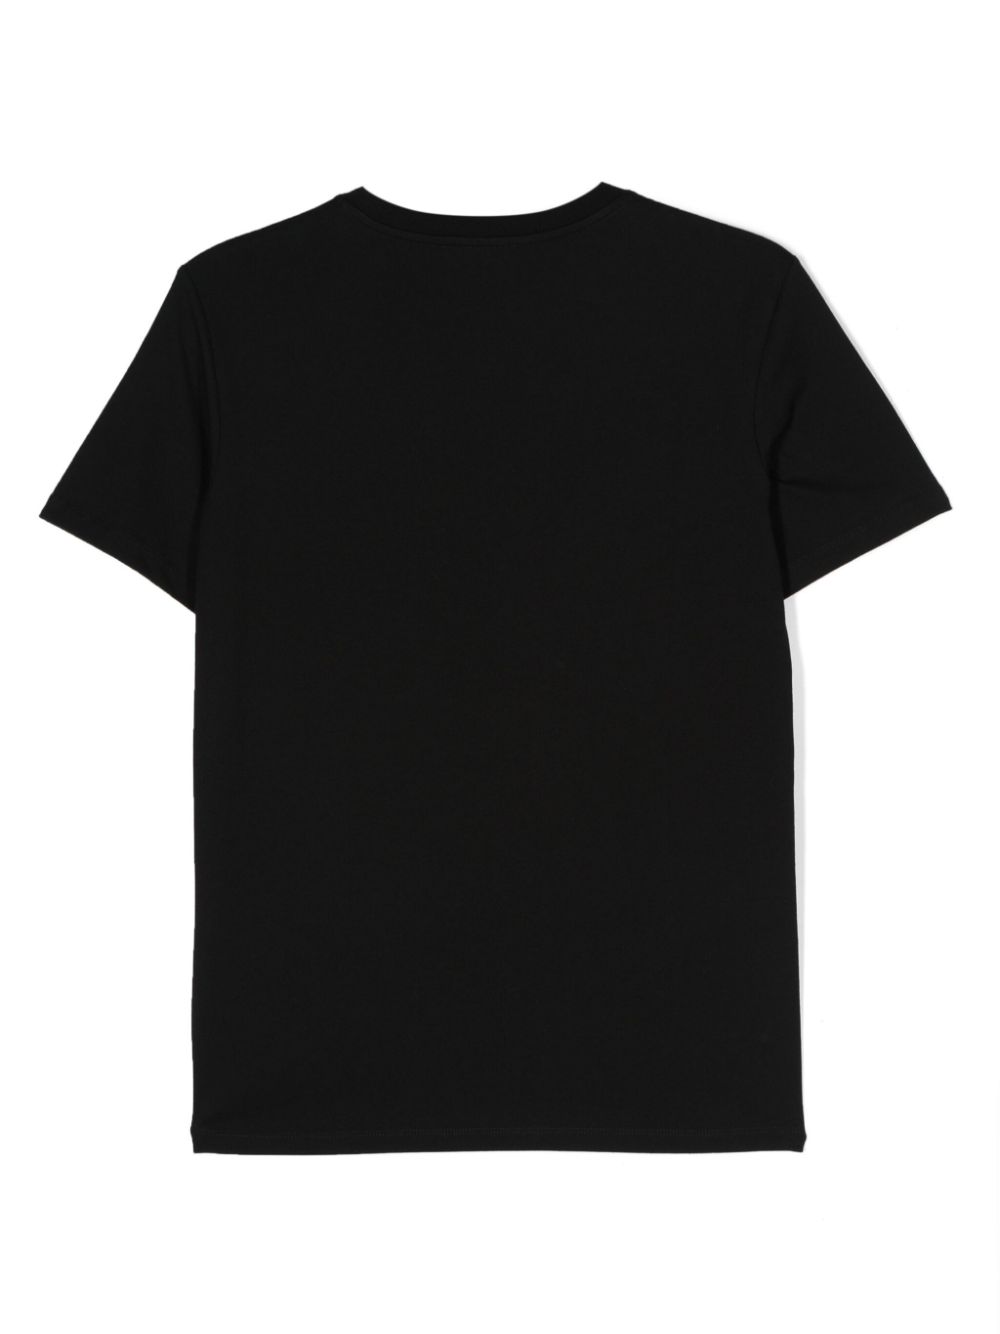 Black children's t-shirt with logo